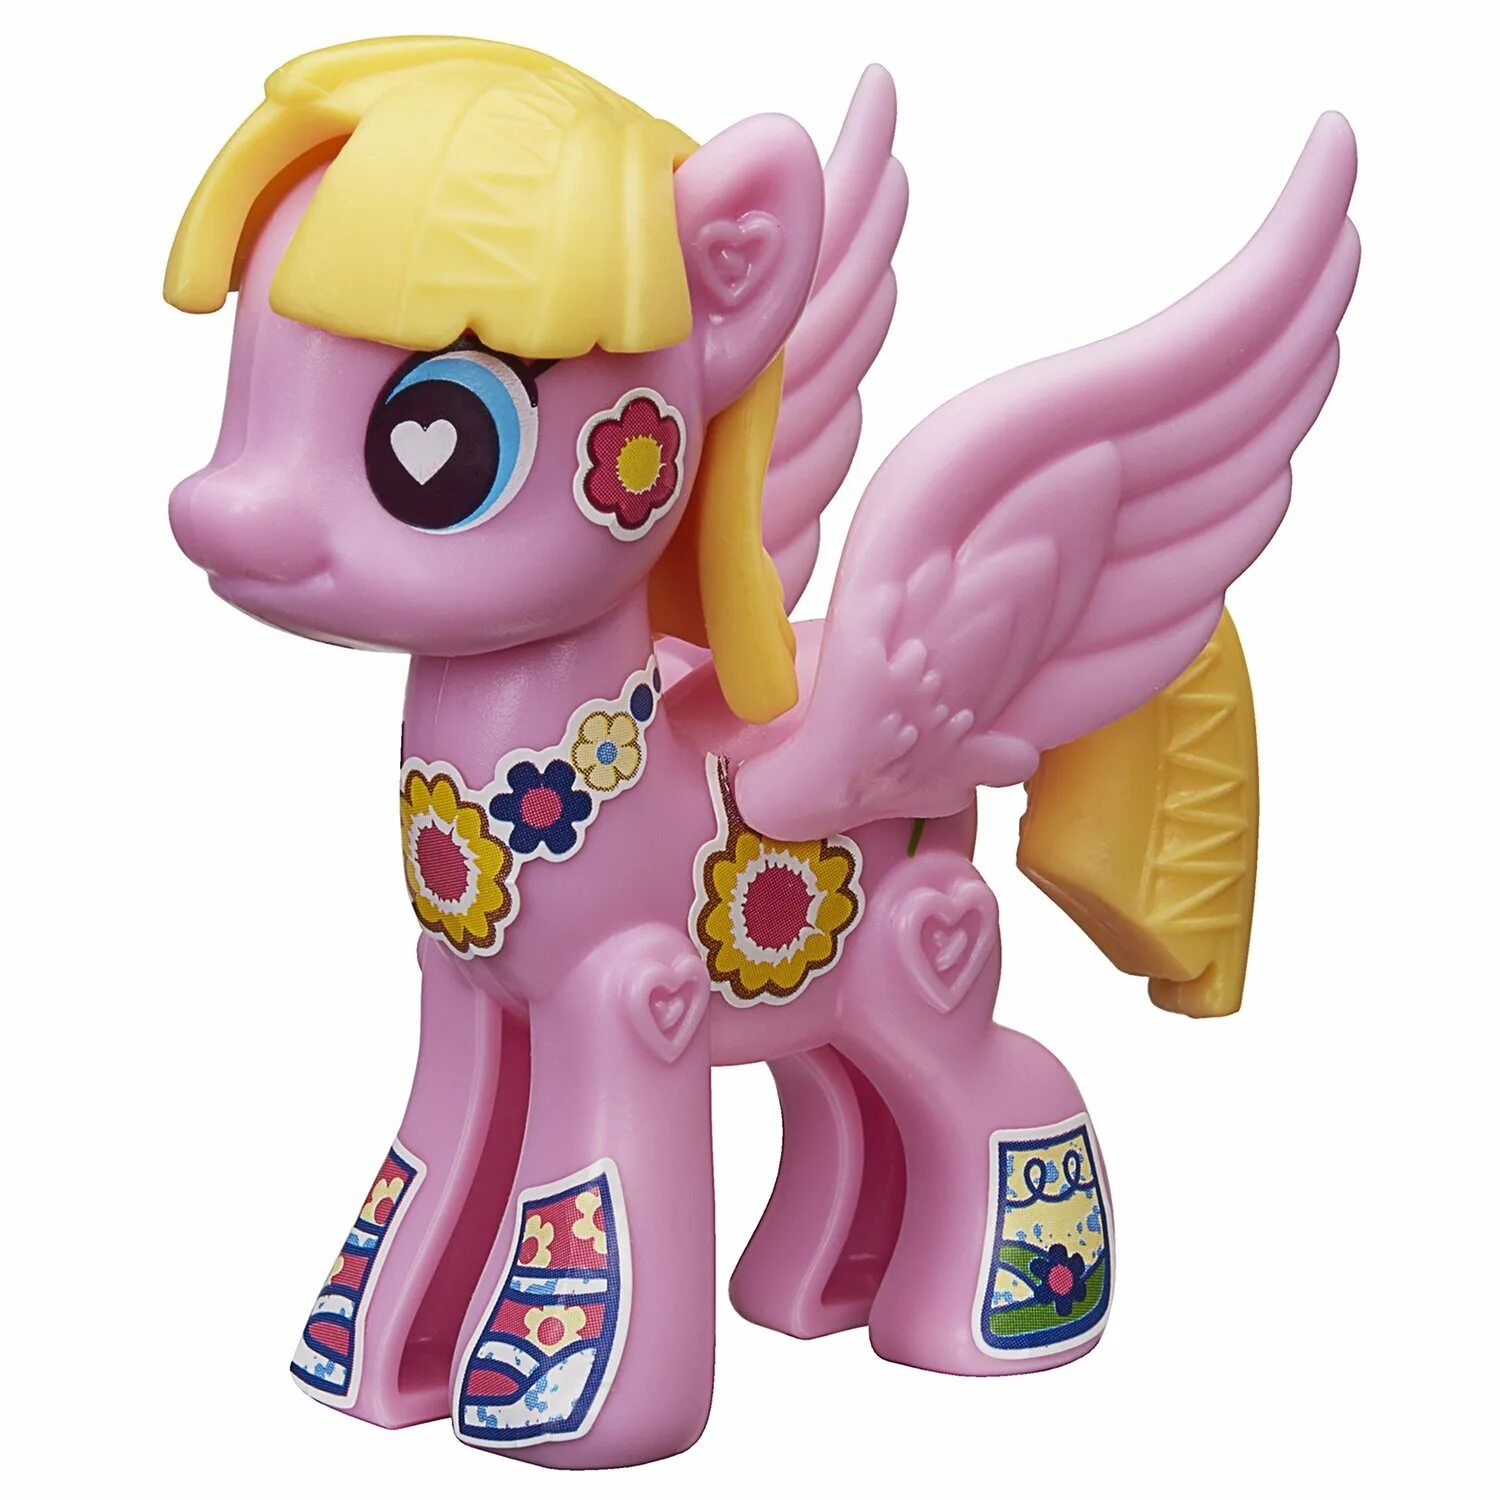 My little pony отзывы. My little Pony Hasbro набор. B3592 Hasbro my little Pony. B3592 Hasbro. My little Pony игрушки Hasbro.